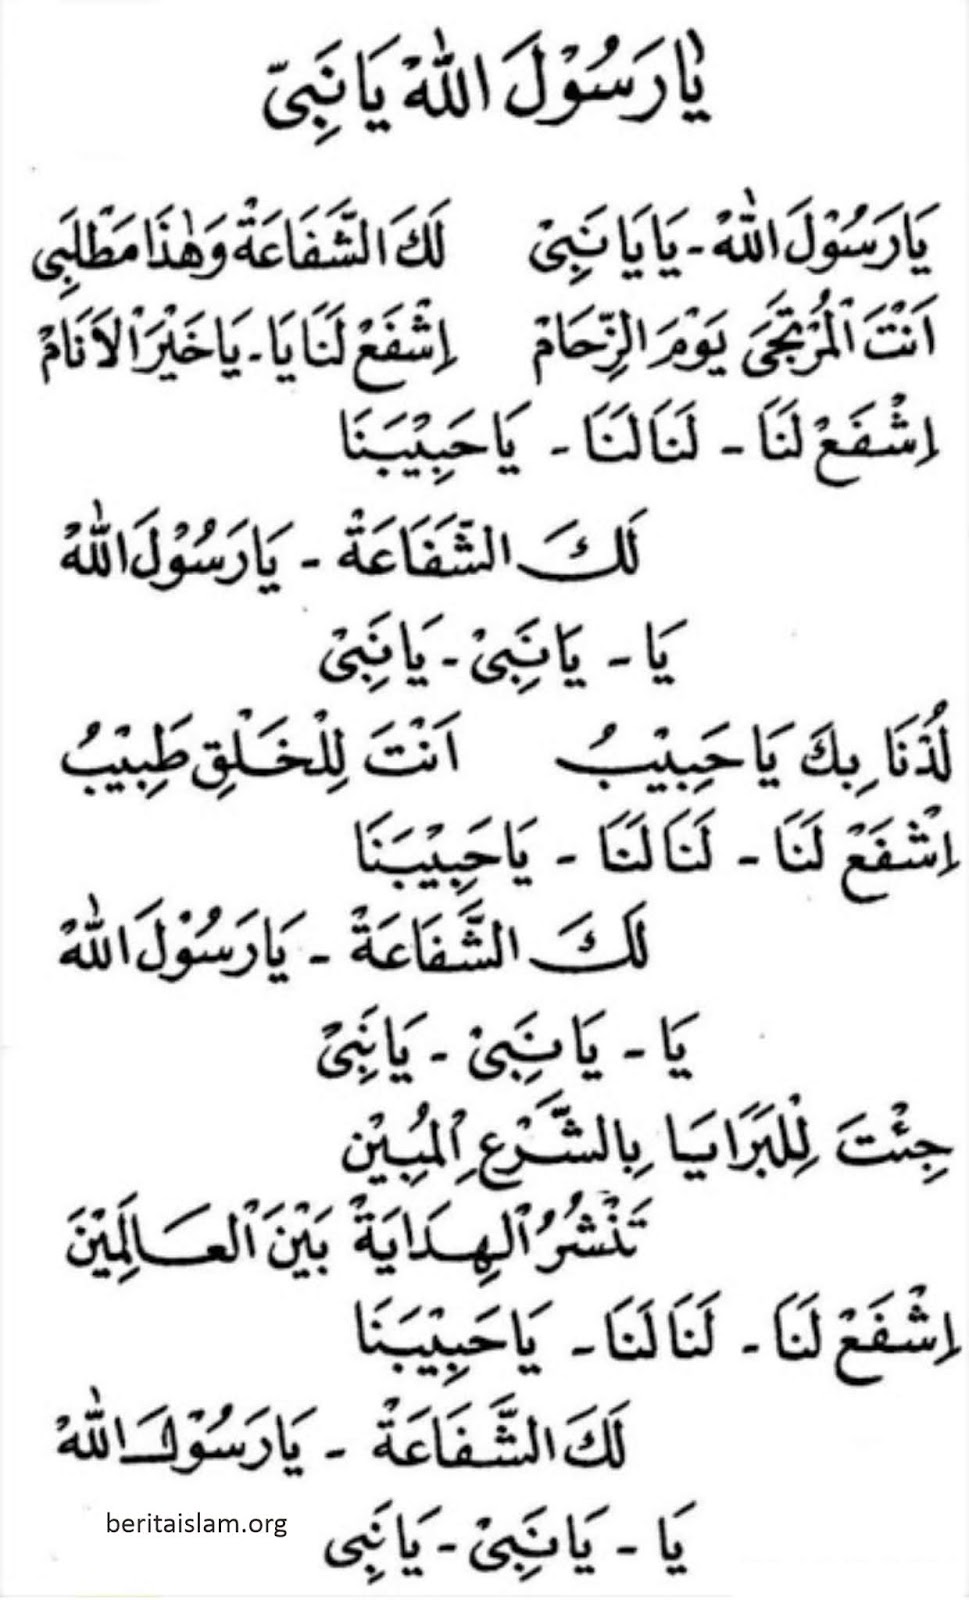 Lirik Sholawat Isyfa'lana (Yaa Rasulallah Yaa Nabi) Teks Arab, Latin